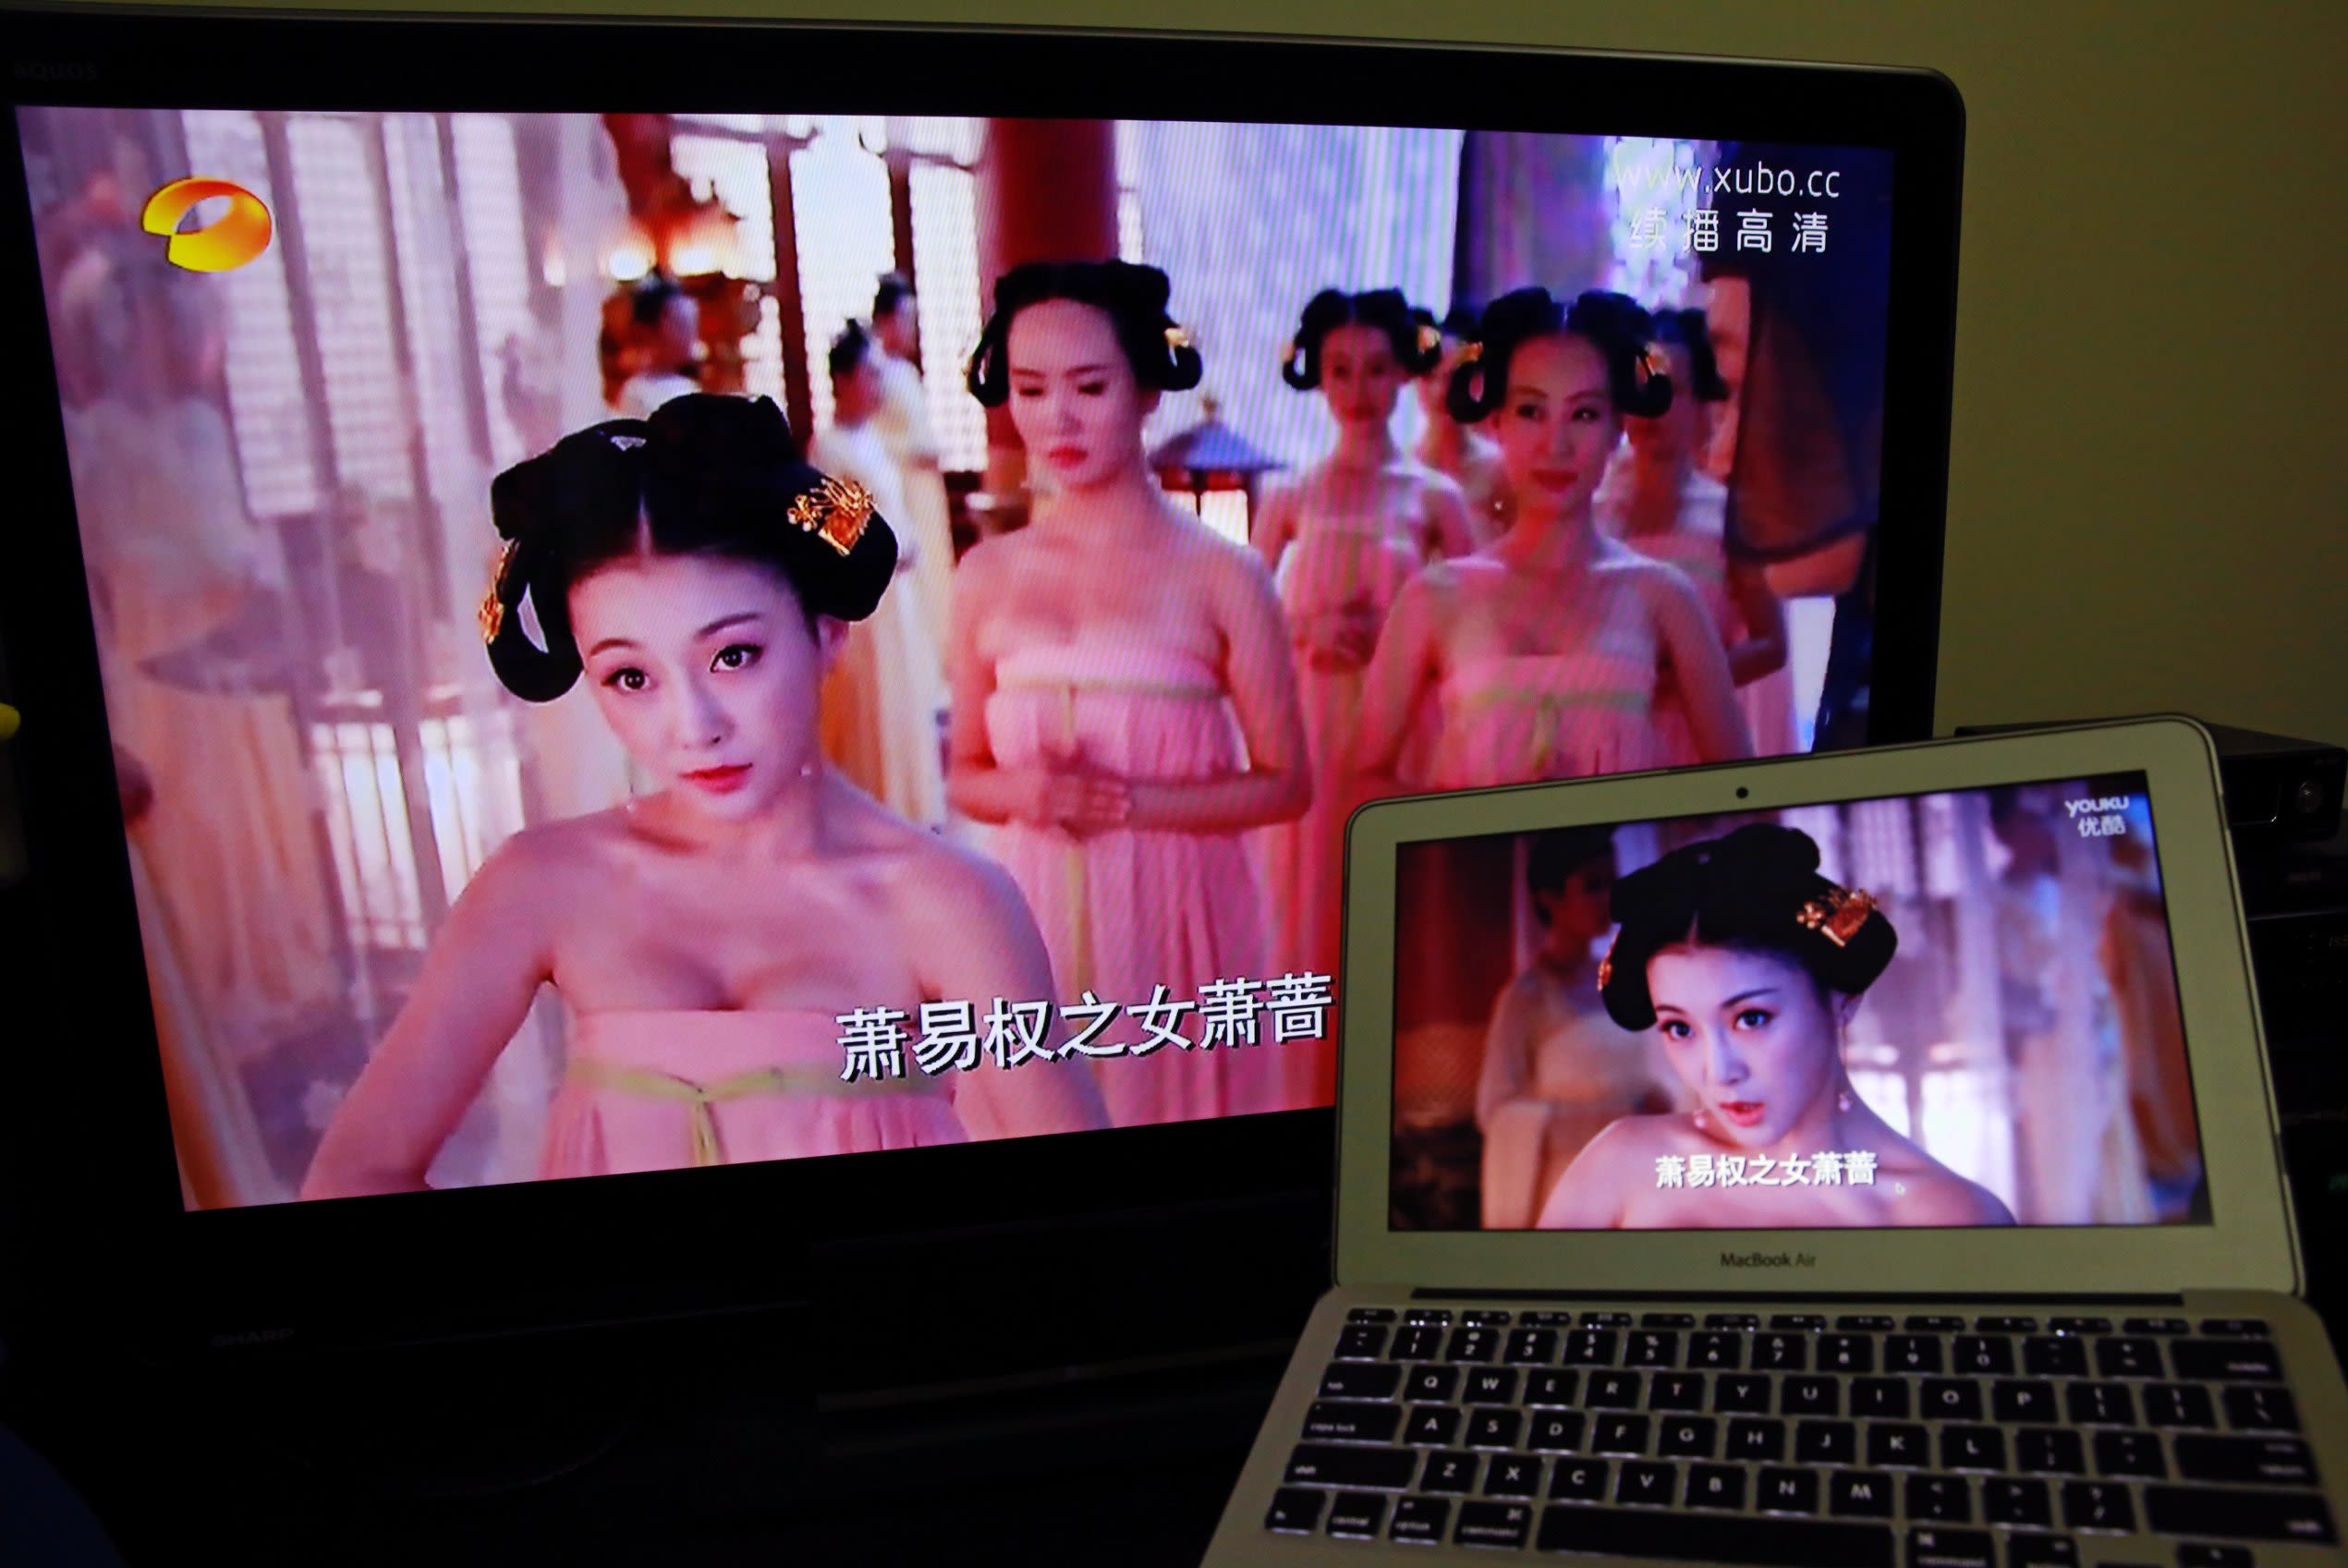 China School Sex Vidro - China bans same-sex romance from TV screens | CNN